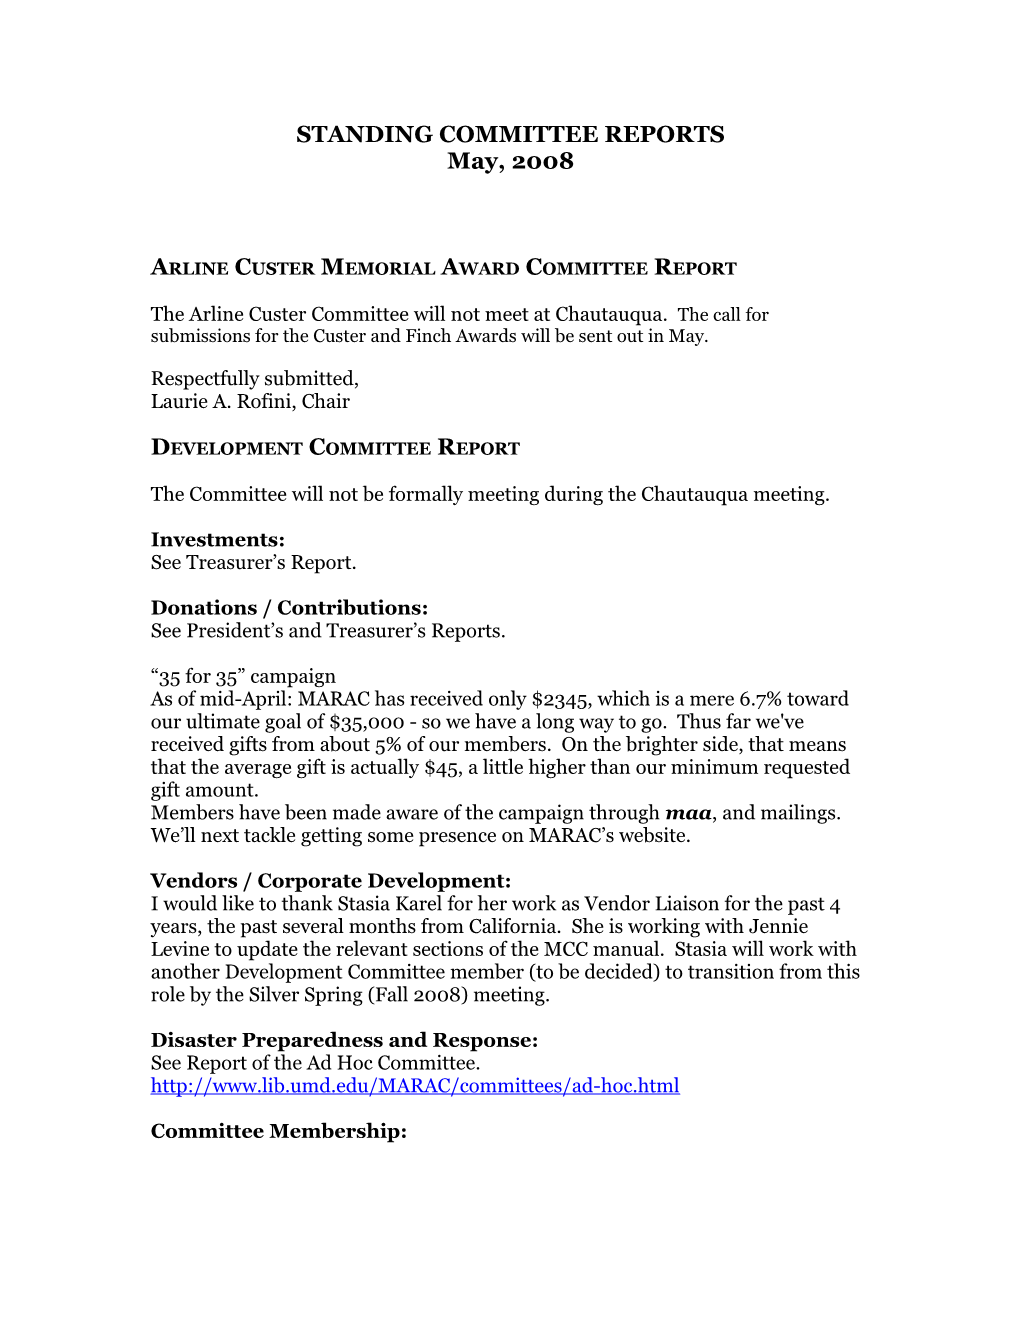 MARAC Arline Custer Memorial Award Committee Report